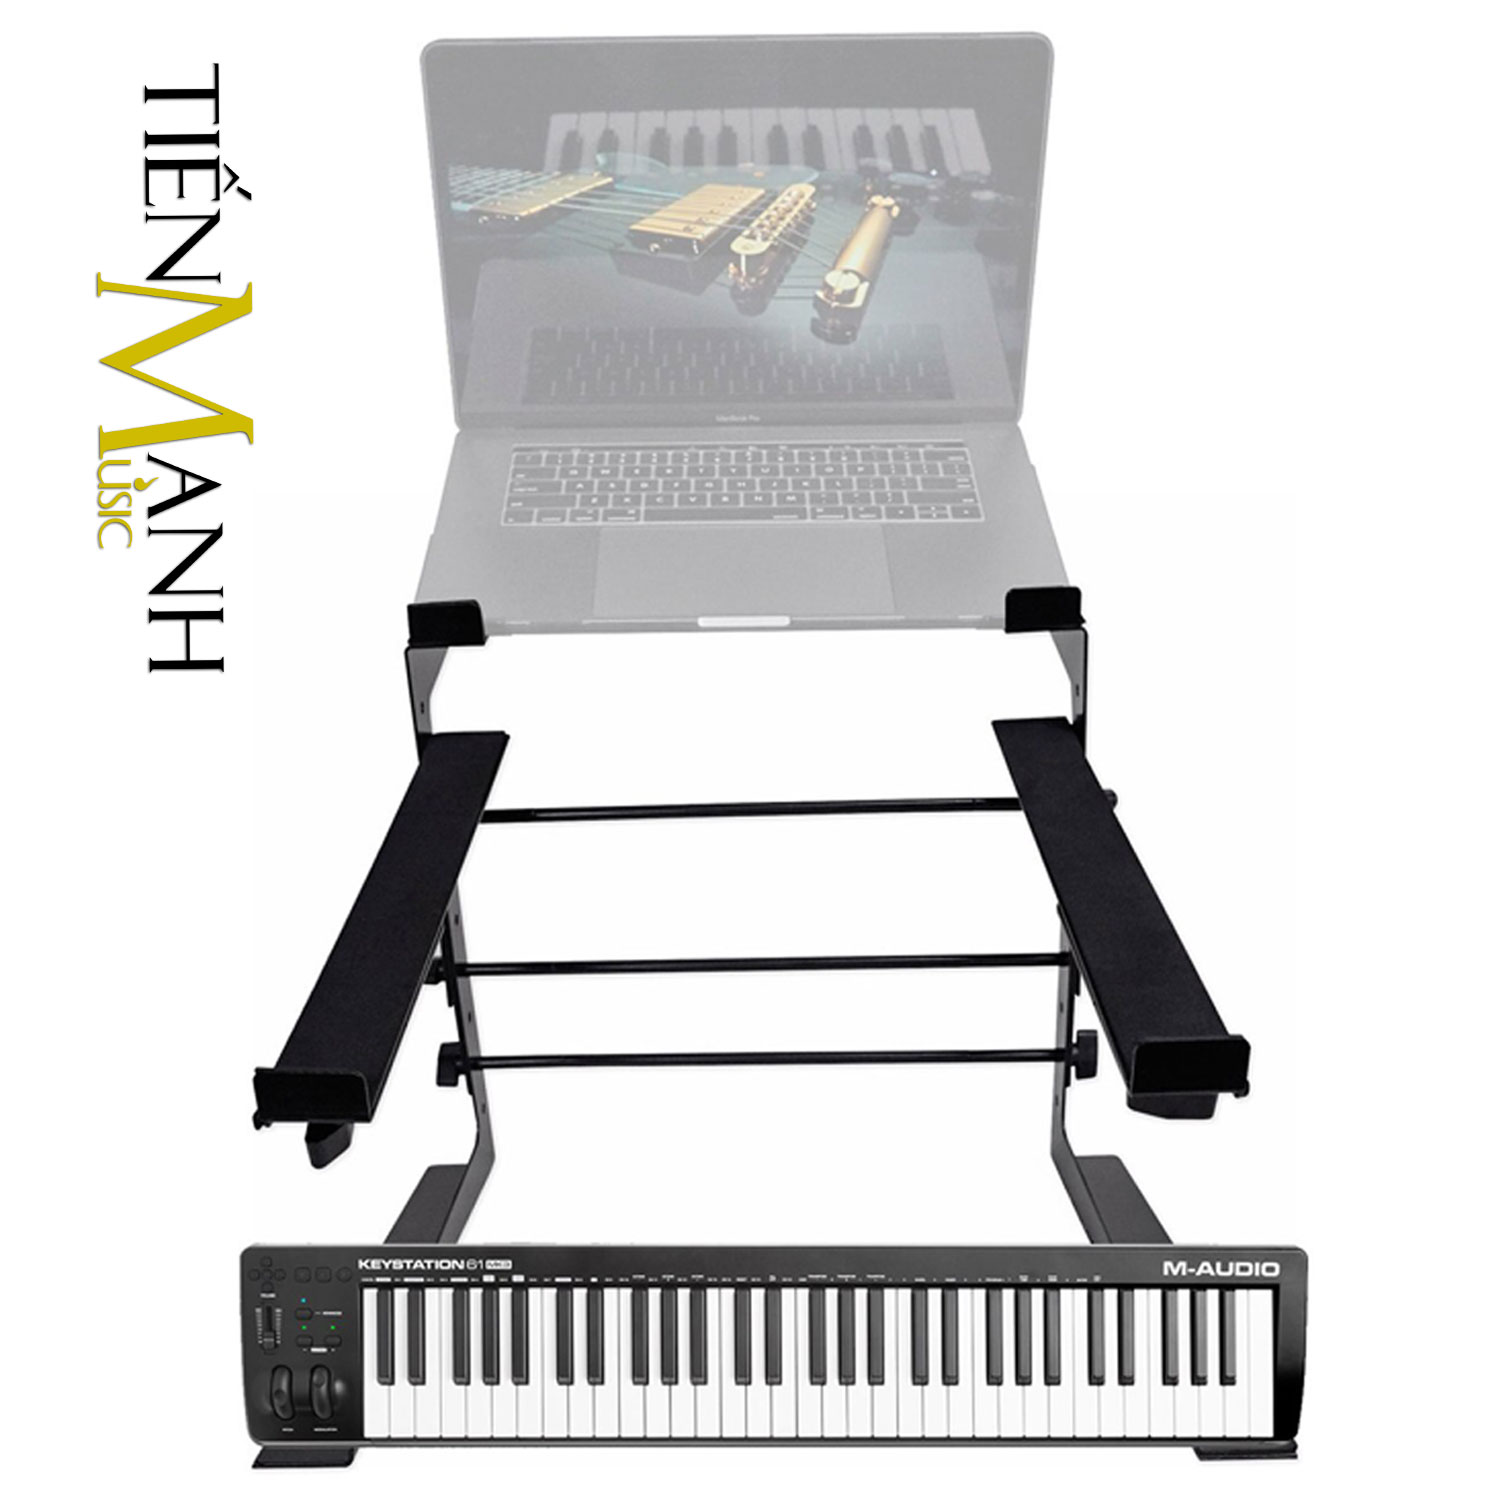 Mat-dan-M-Audio-Keystation-61-Keys-MIDI-Controller.jpg